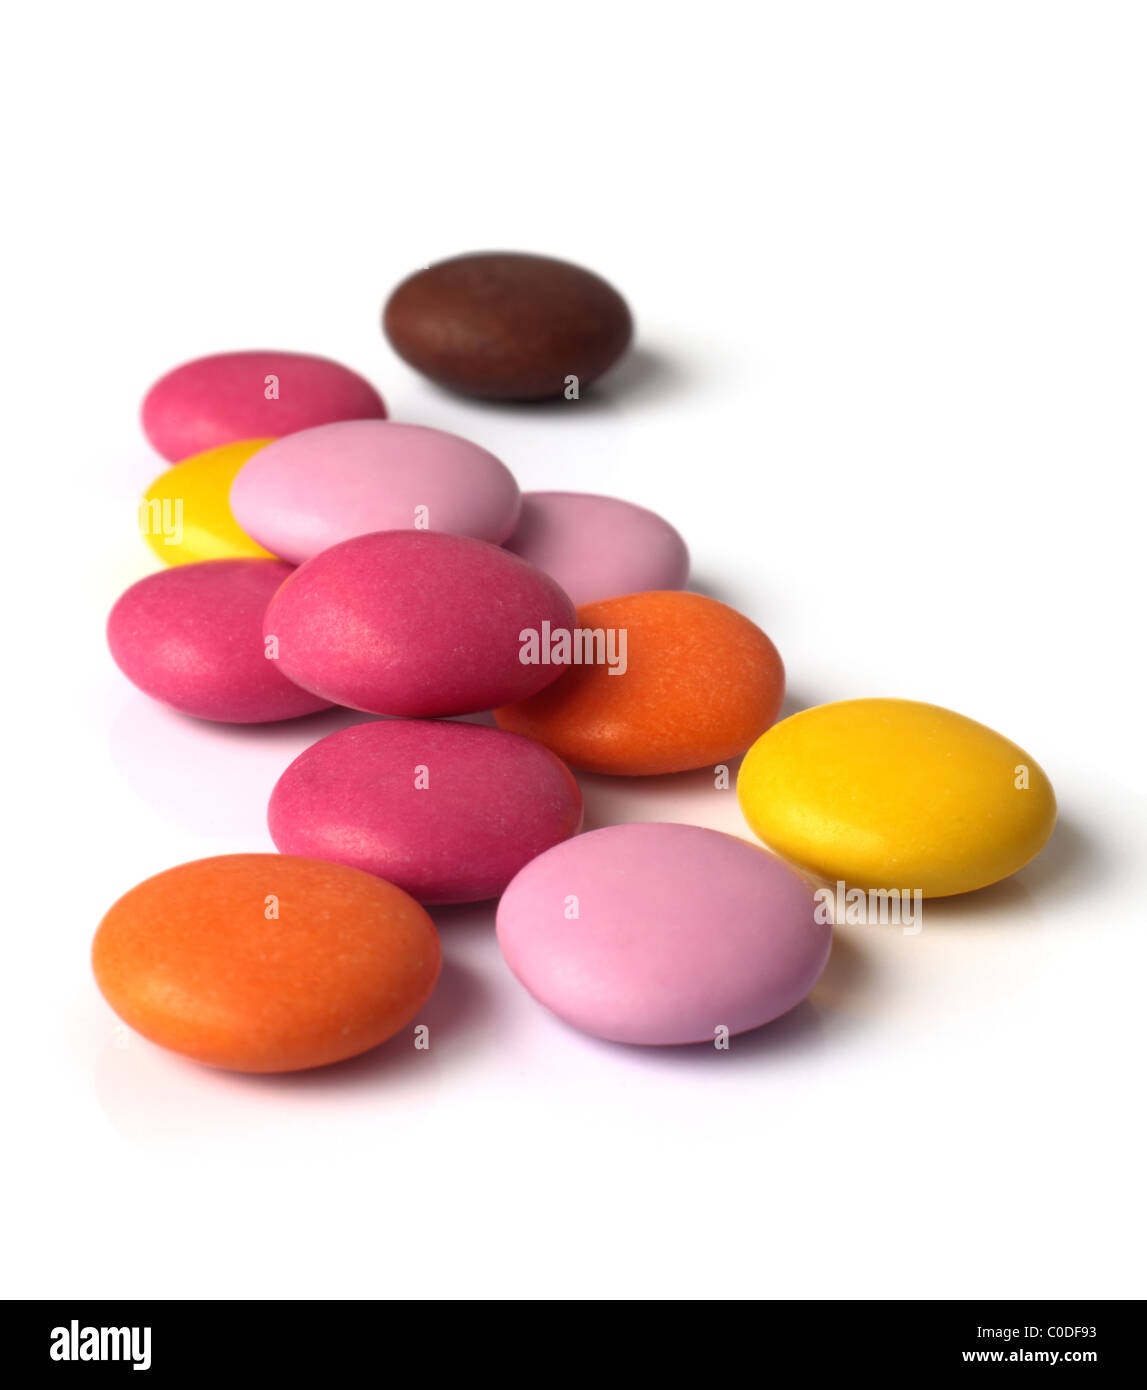 Chocolats enrobés de bonbons colorés de près. Banque D'Images